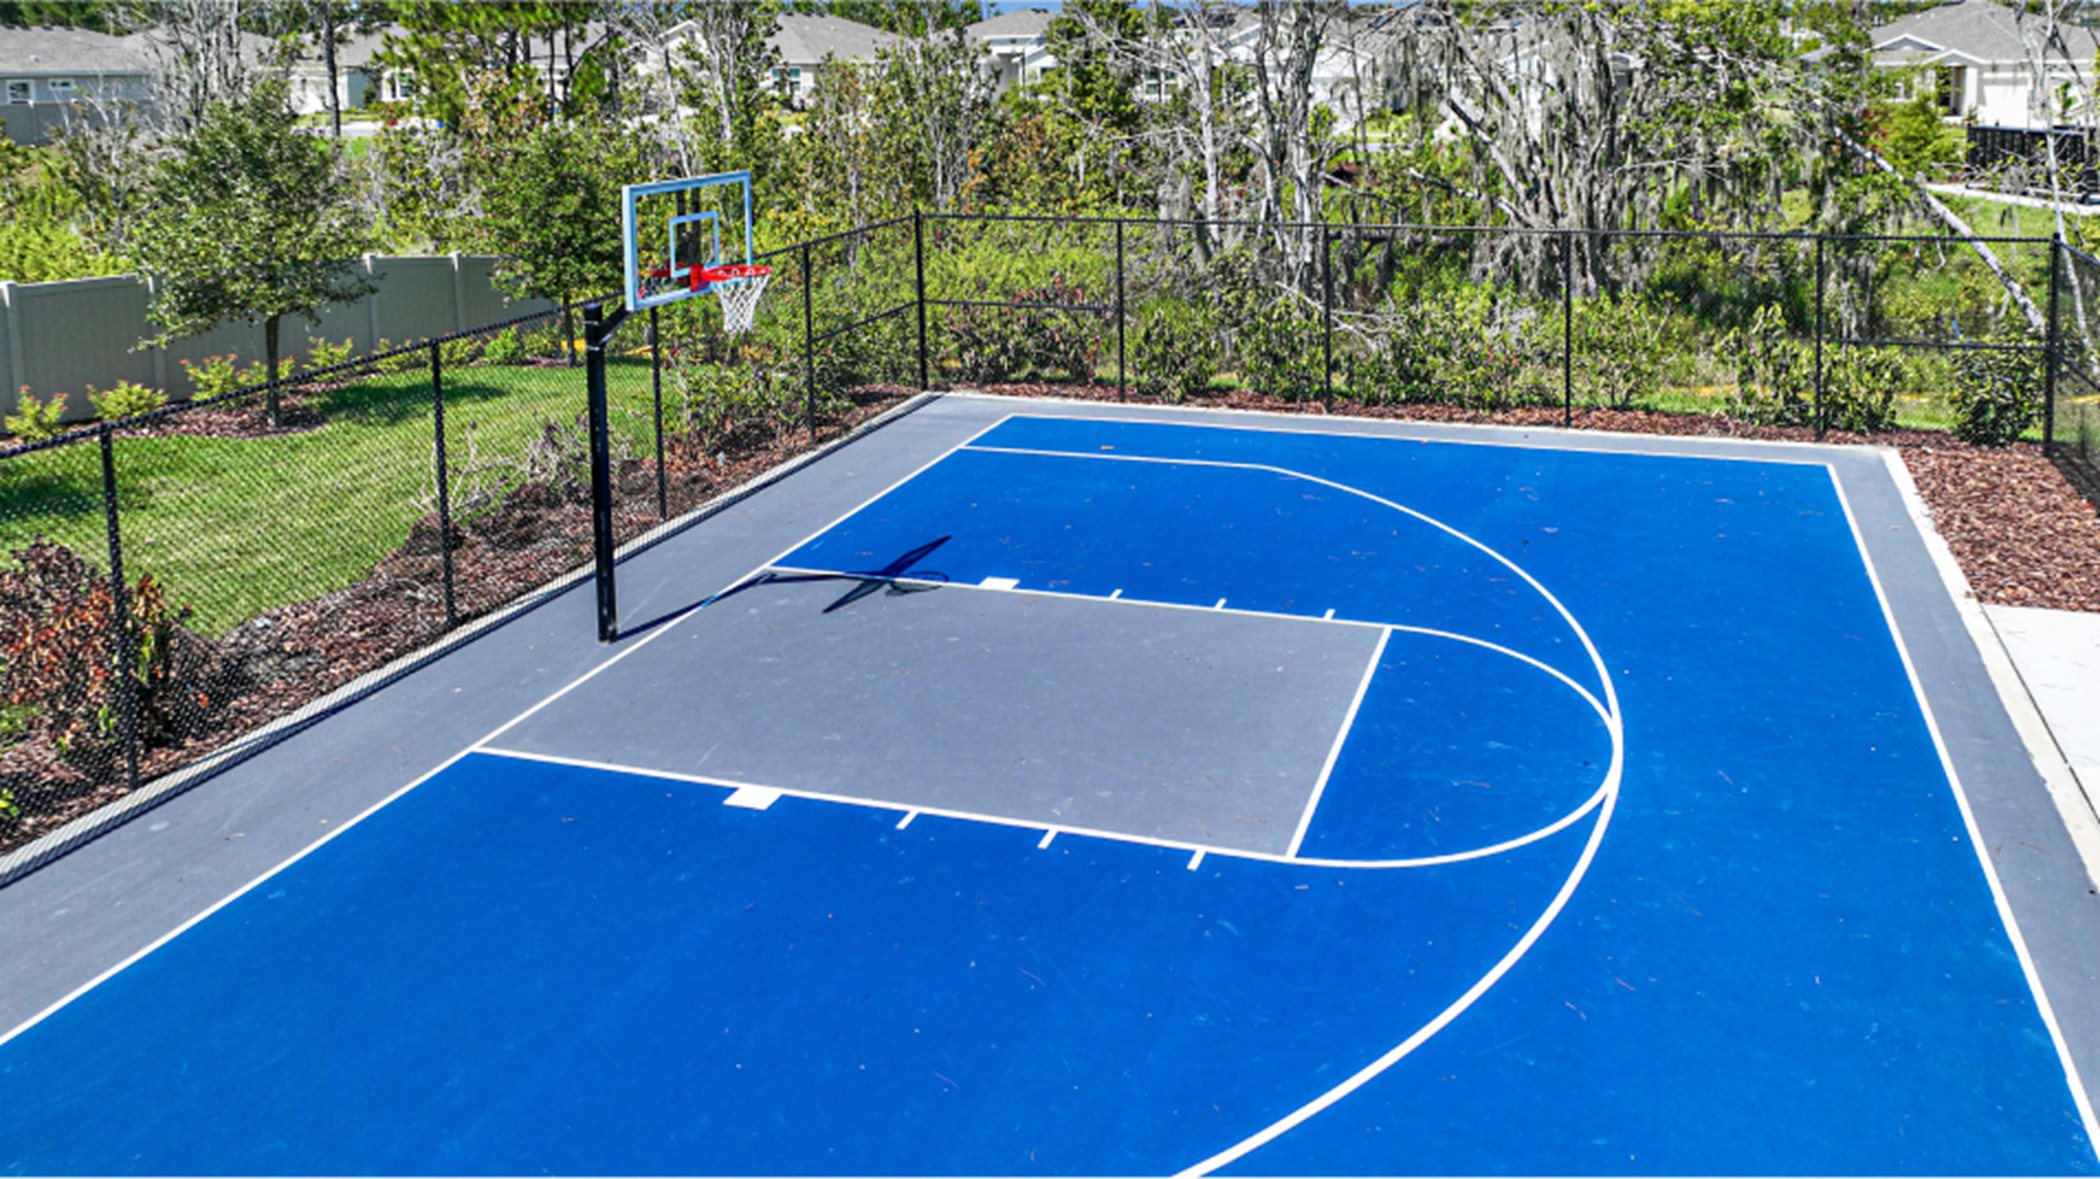 North Park Isle basketball court